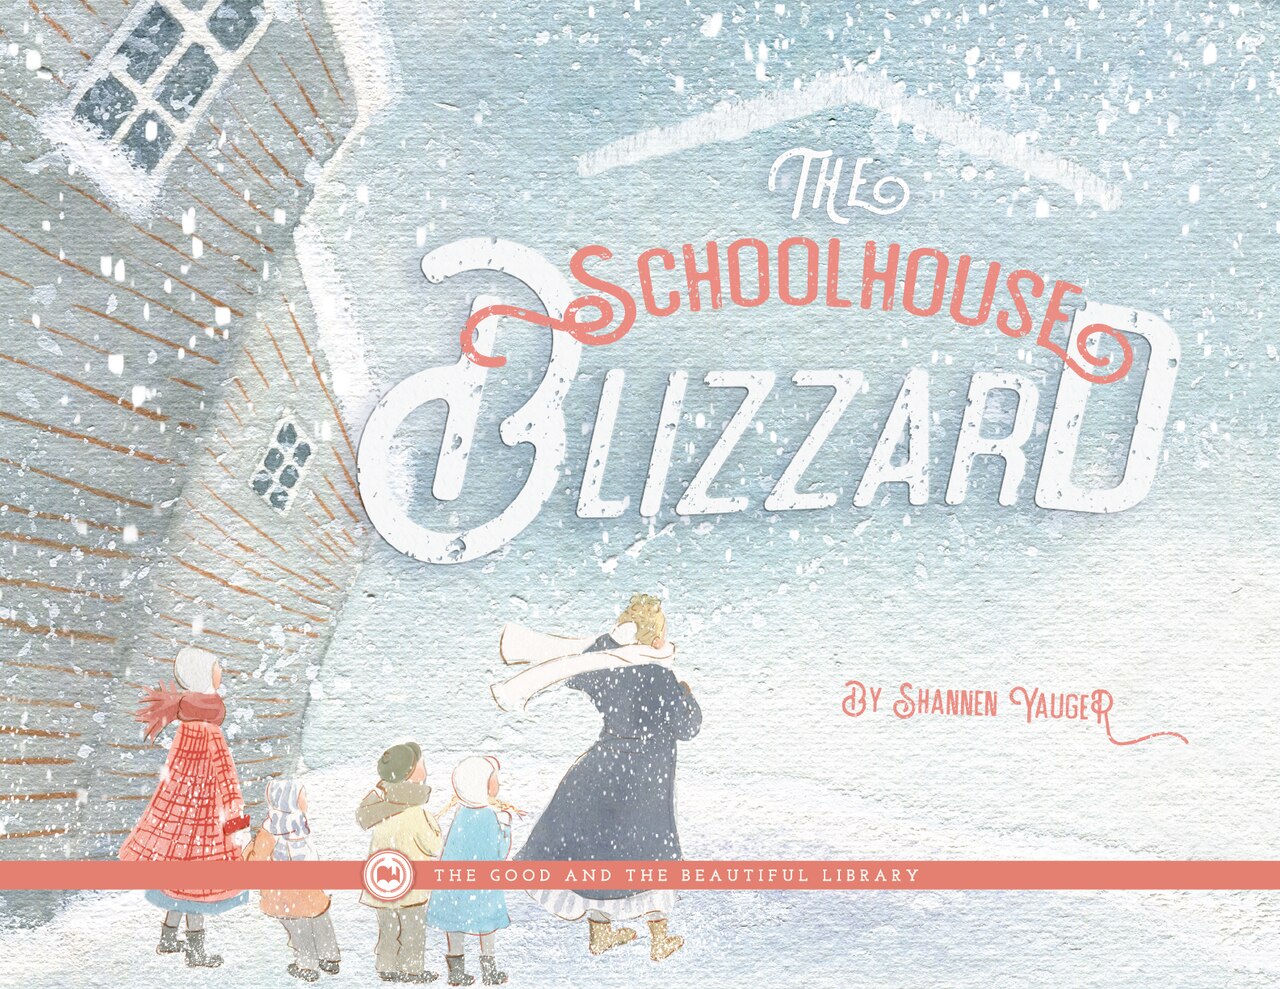 The Schoolhouse Blizzard